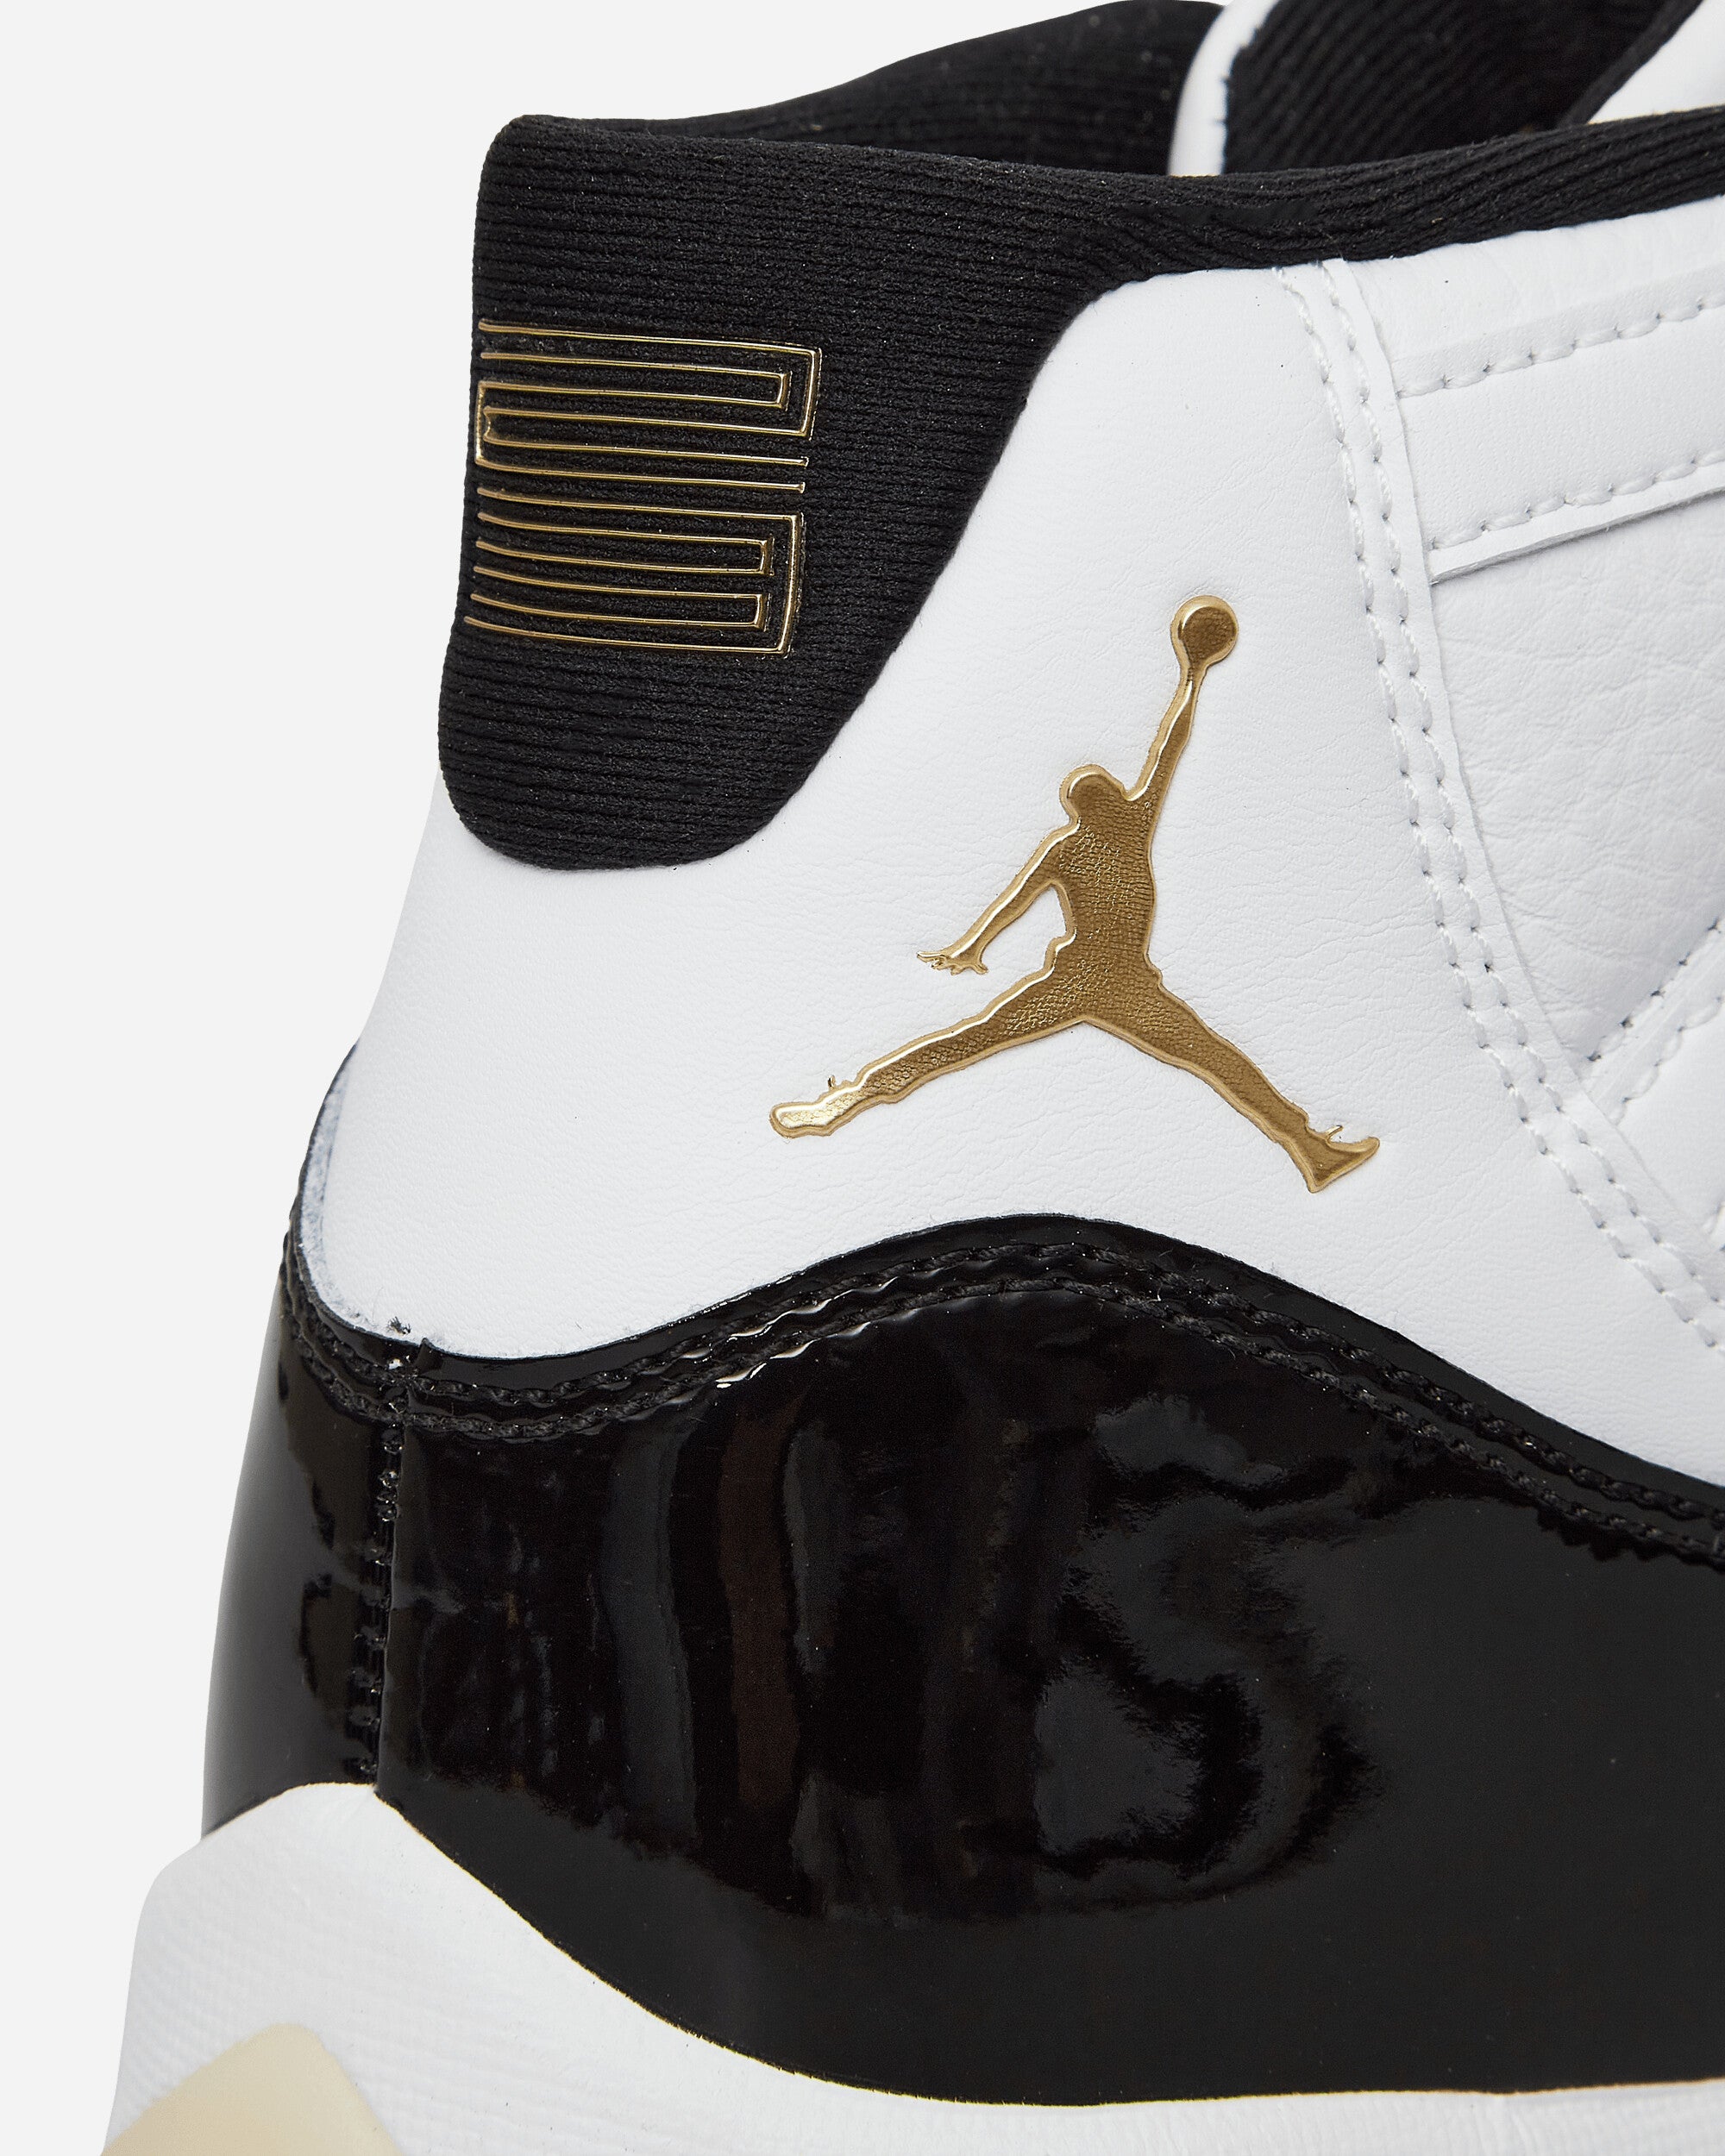 Nike Jordan Air 11 Retro White/Metallic Gold/Black Sneakers Mid CT8012-170